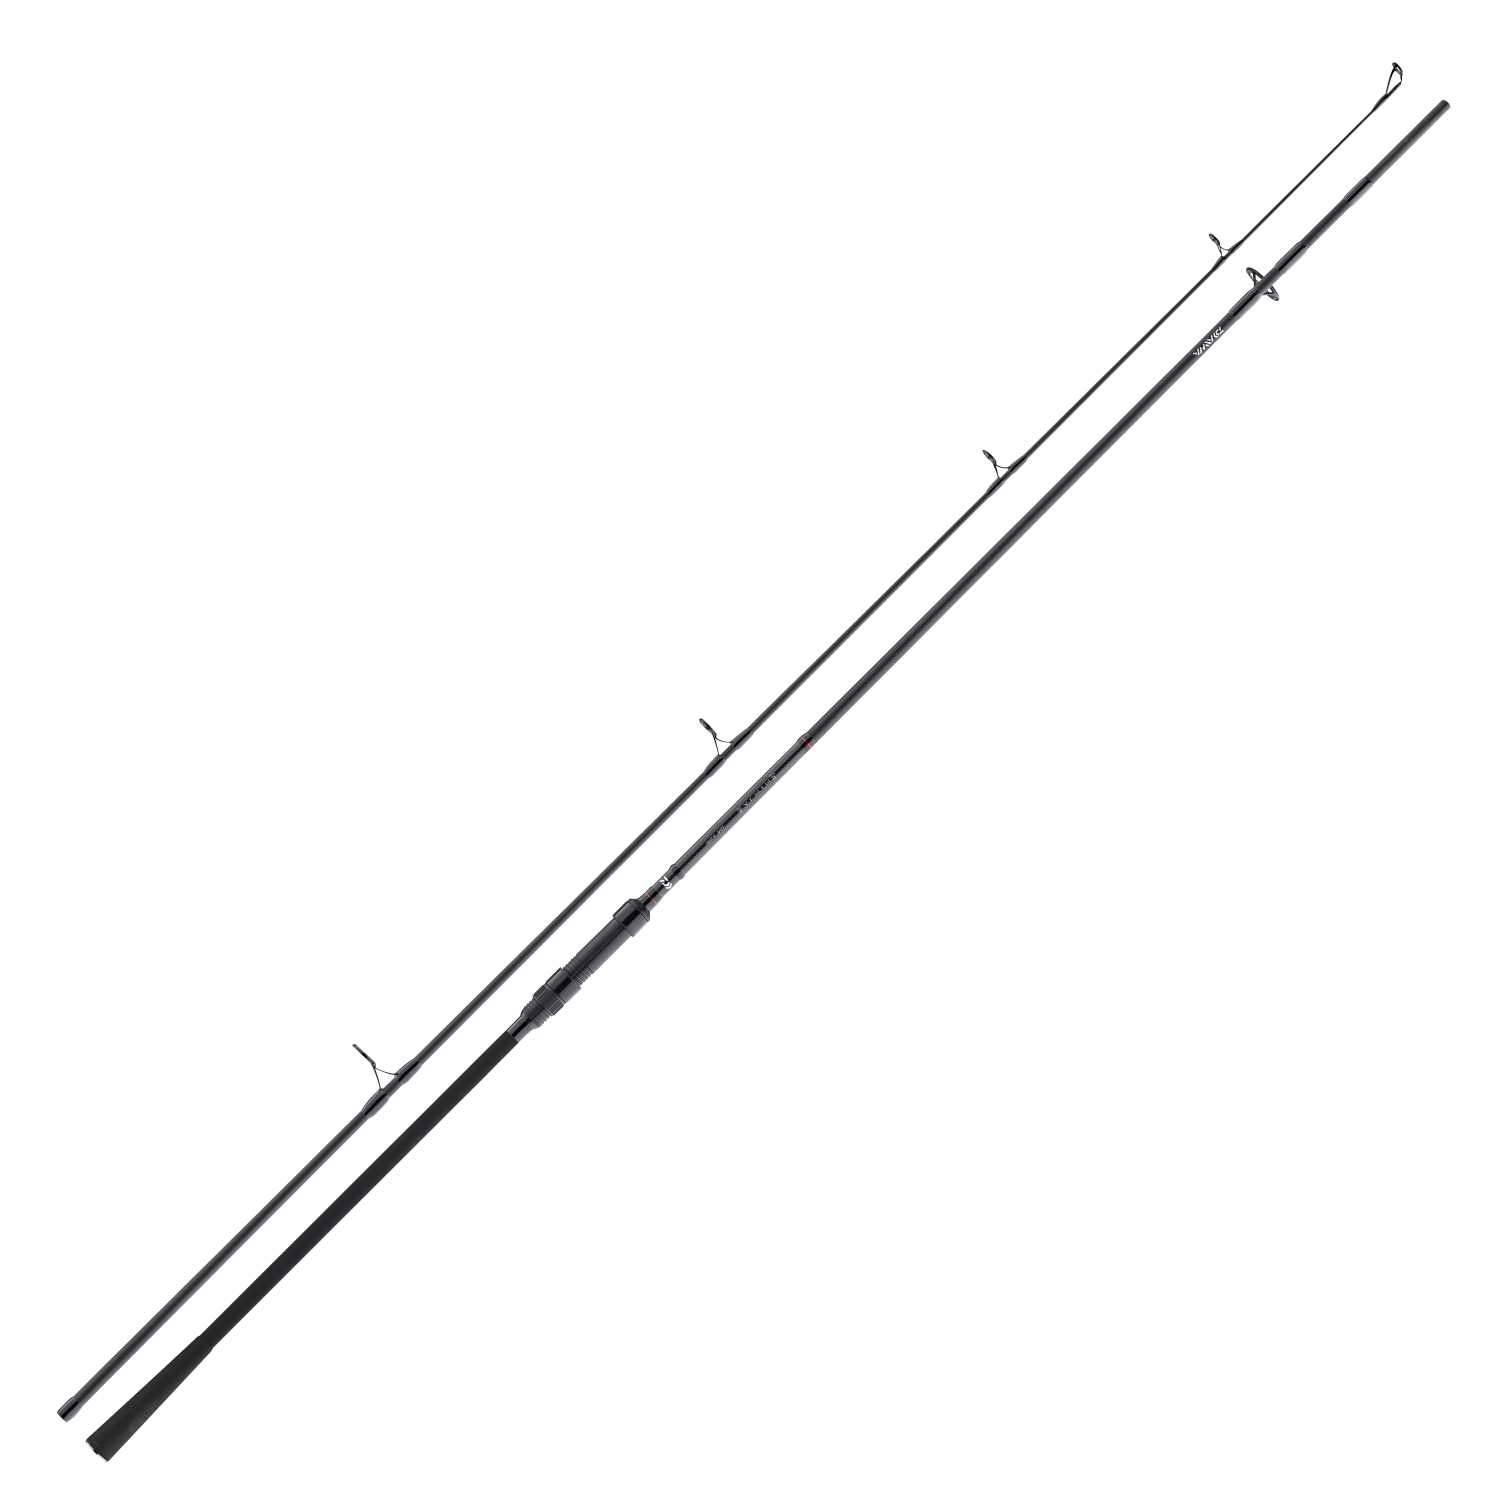 Daiwa Carp Fishing Rod Ninja X (2pcs) at low prices